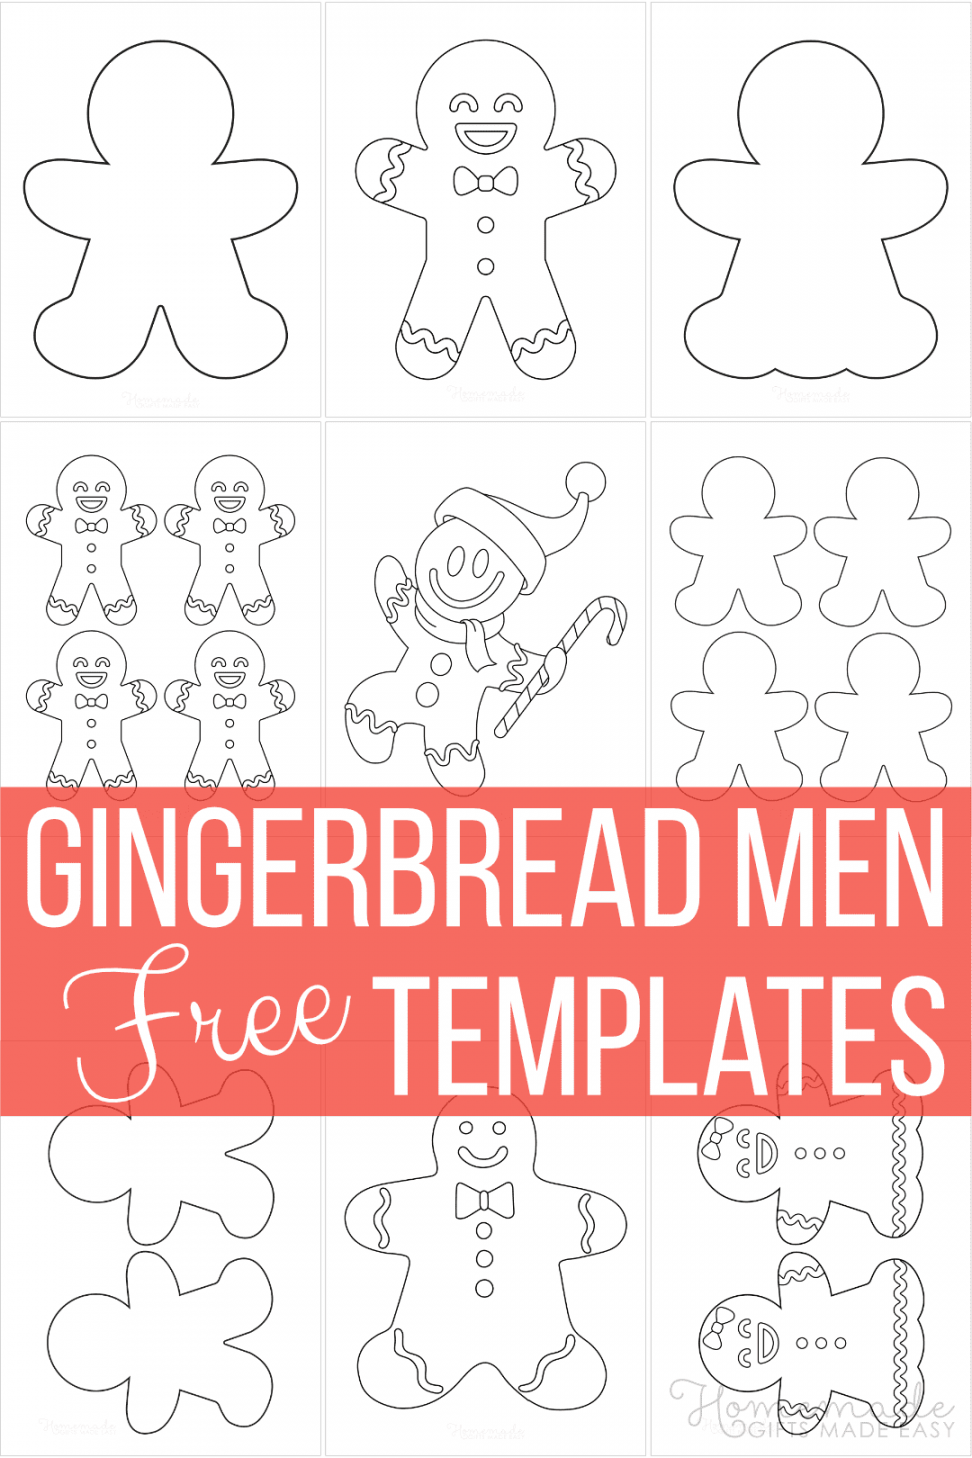 Free Printable Gingerbread Man Templates & Coloring Pages - FREE Printables - Gingerbread Cut Out Printable